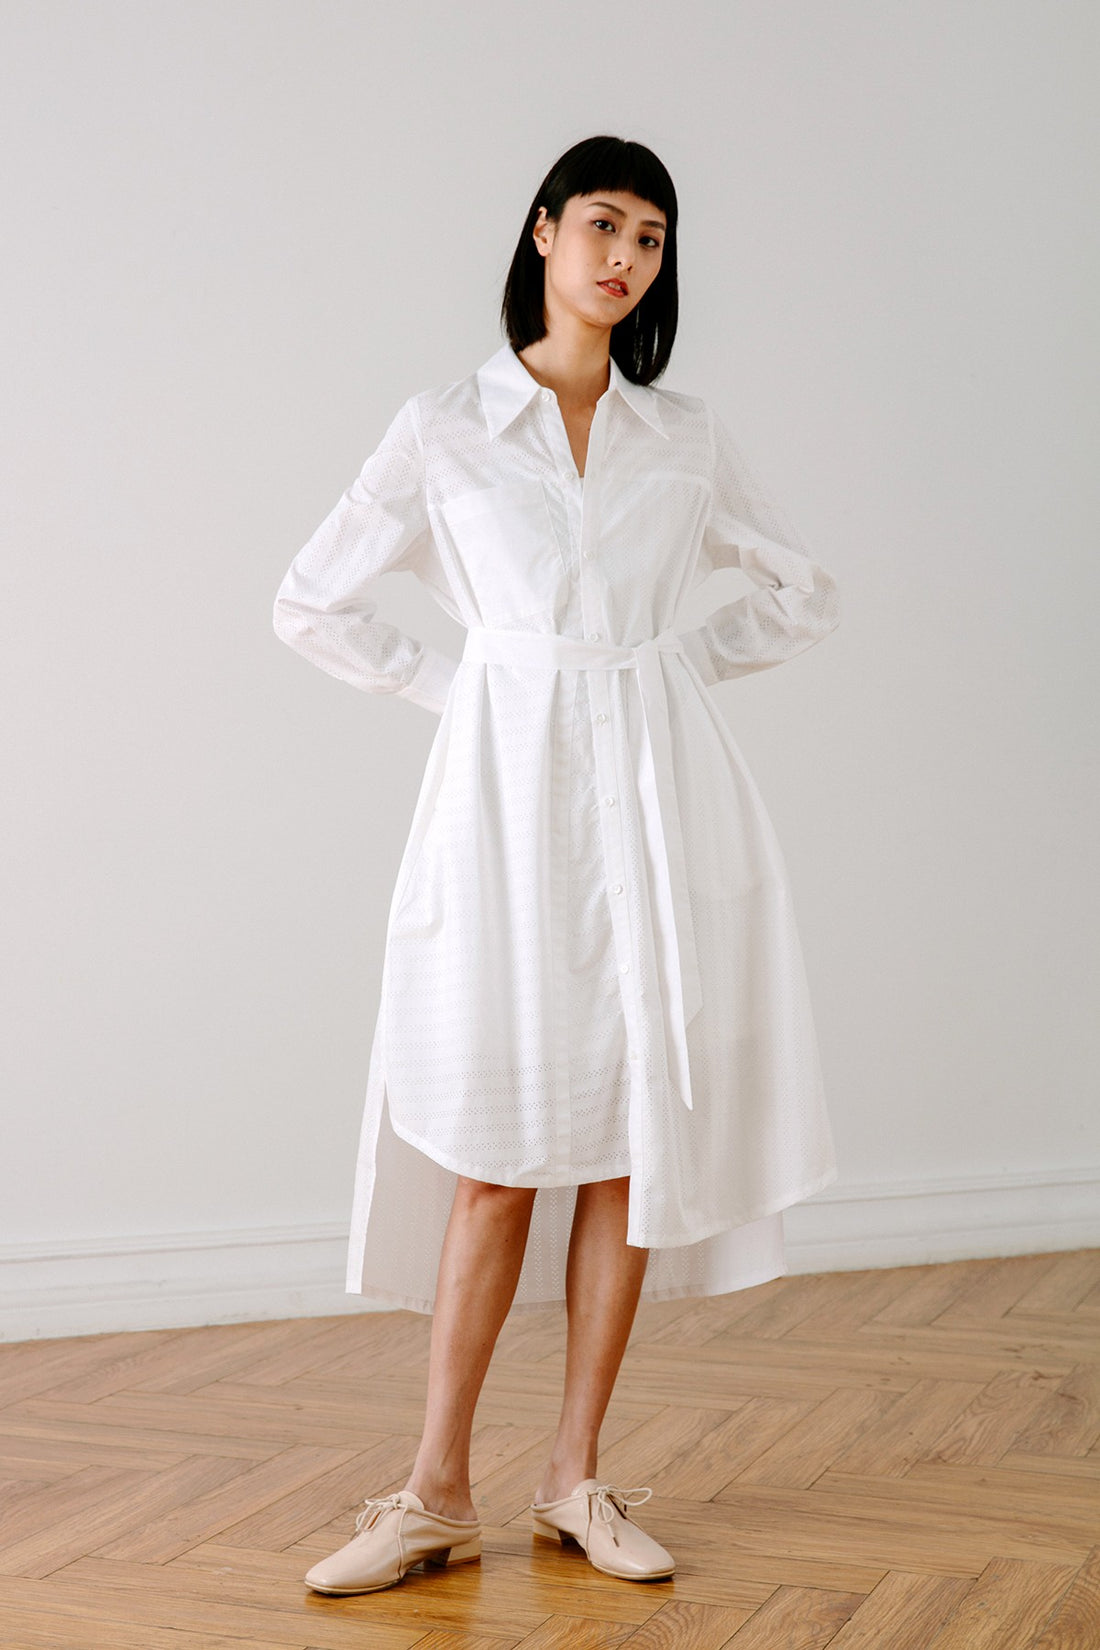 SKYE San Francisco SF California shop ethical sustainable modern chic minimalist luxury clothing women fashion Olivia Shirt Dress white 1